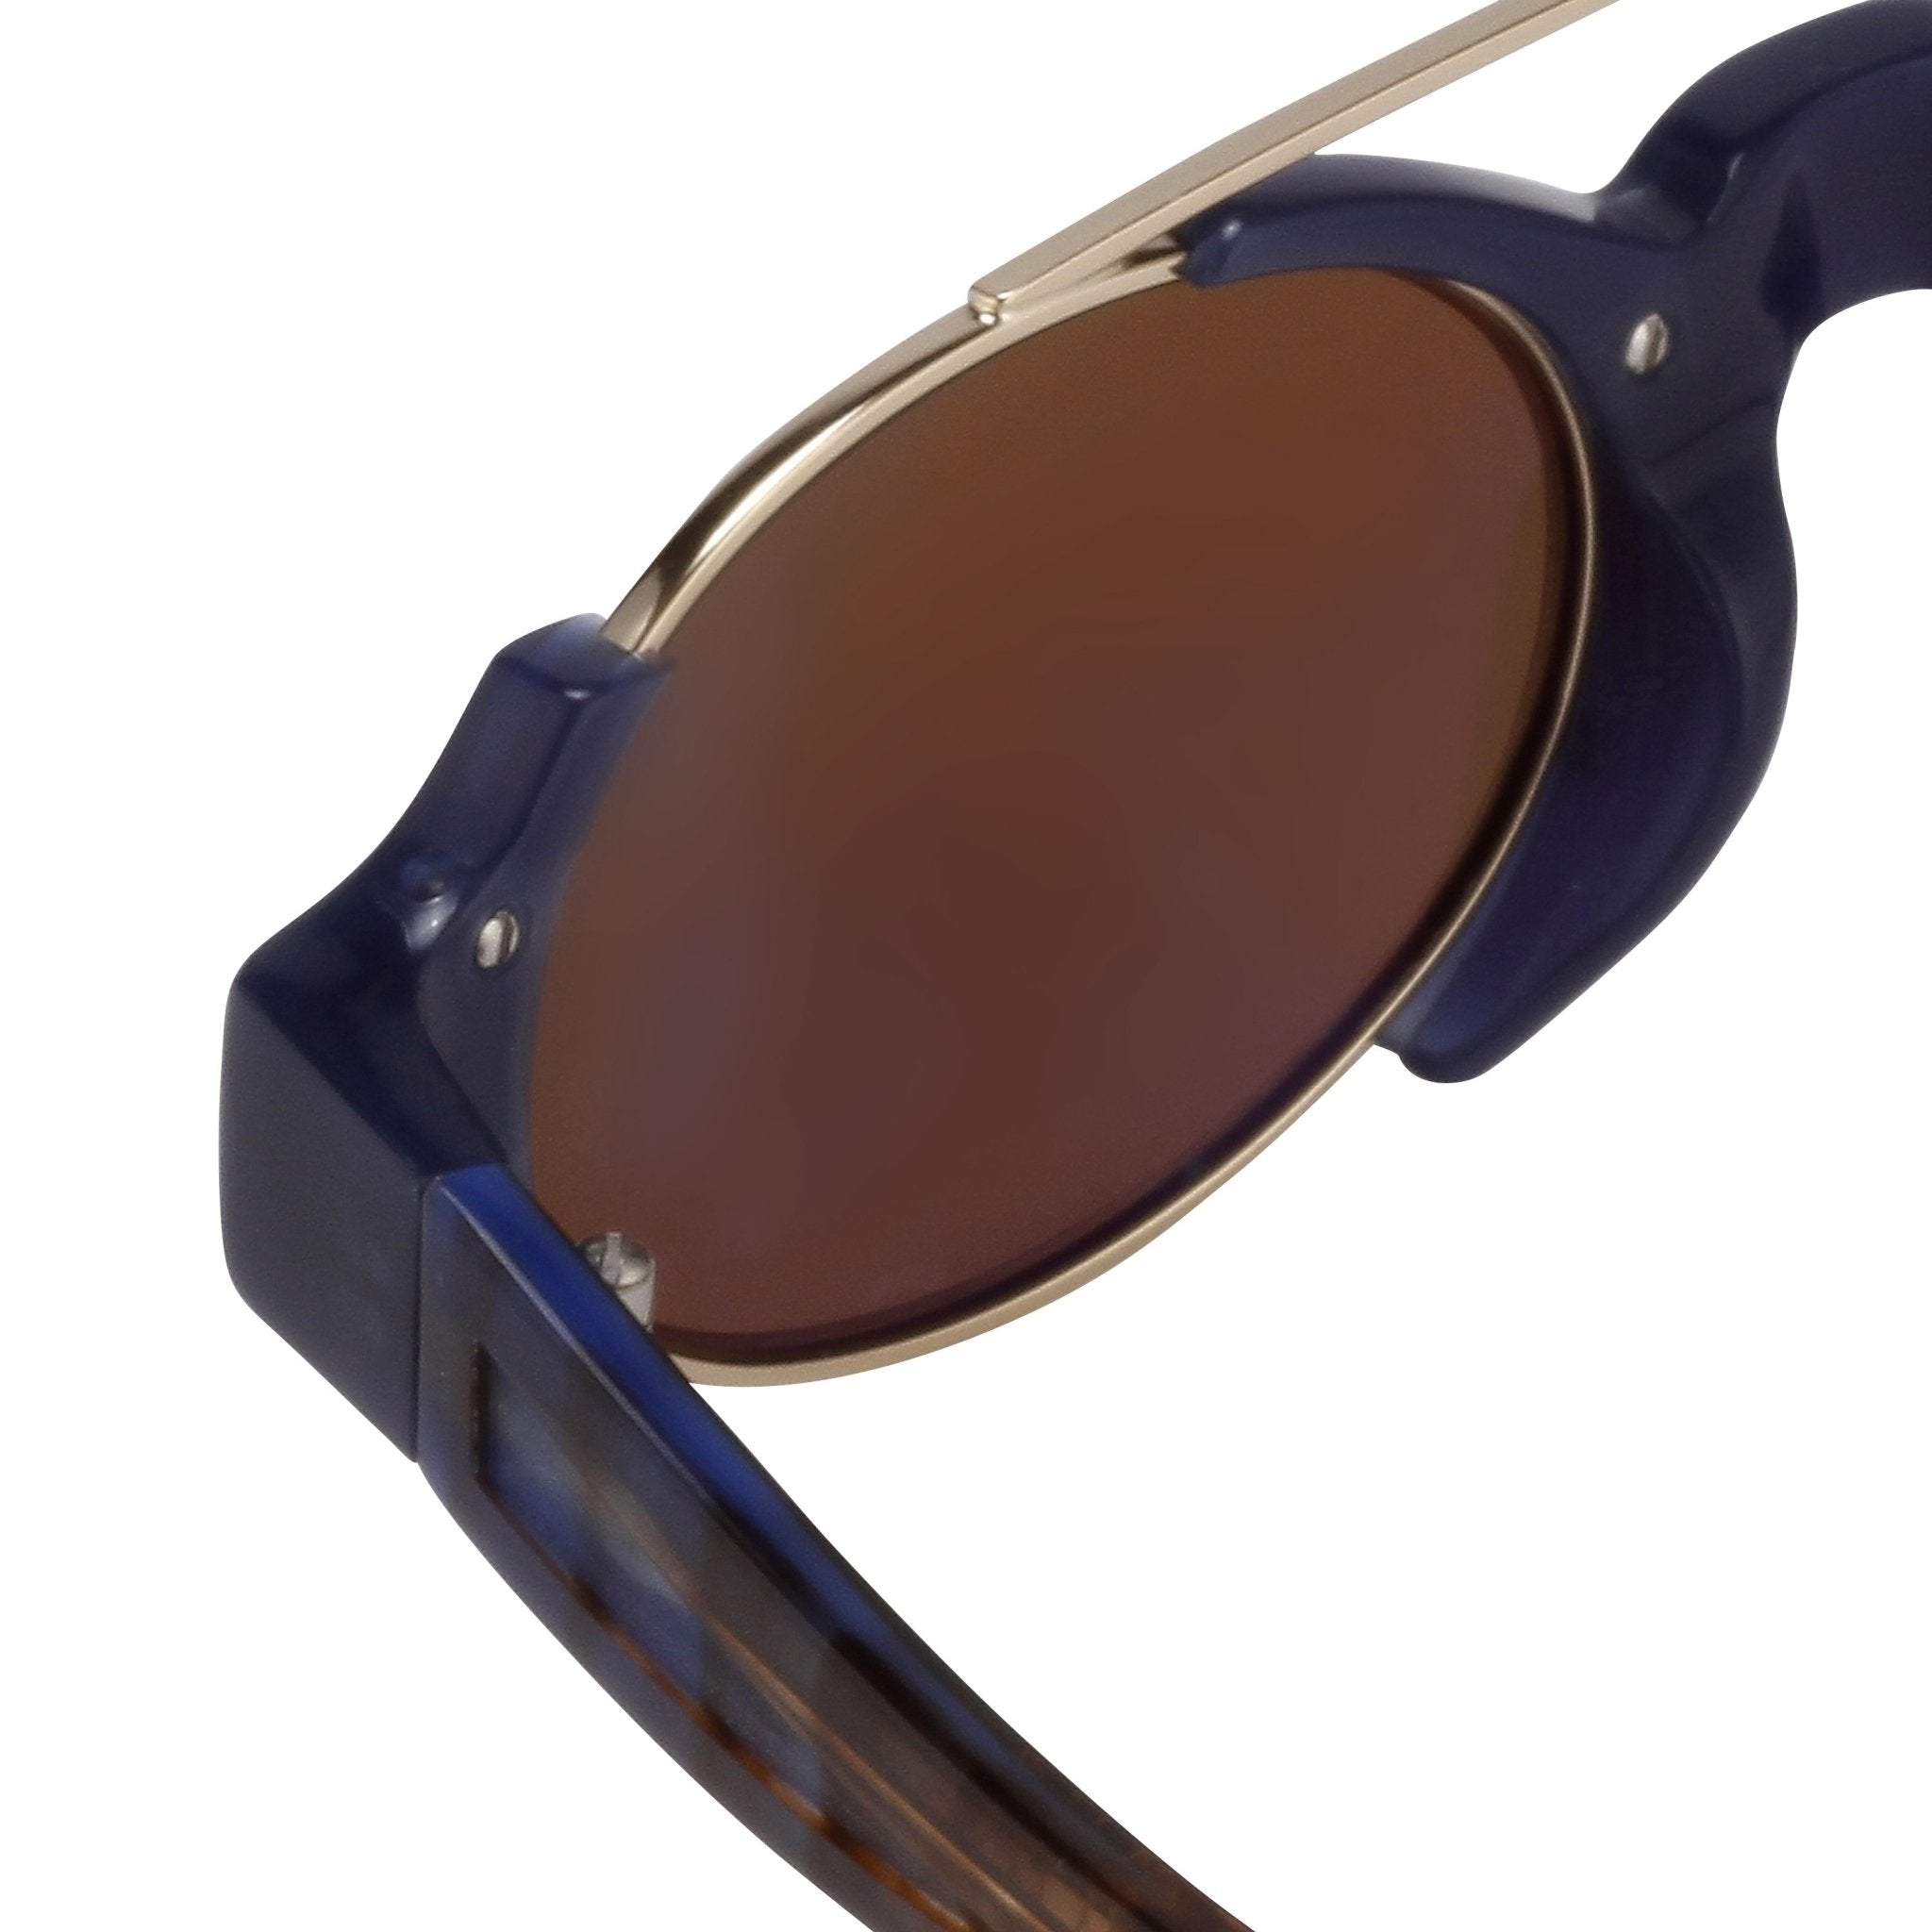 Erdem Women Sunglasses Royal Blue Light Gold with Brown Lenses EDM8C3SUN - Watches & Crystals